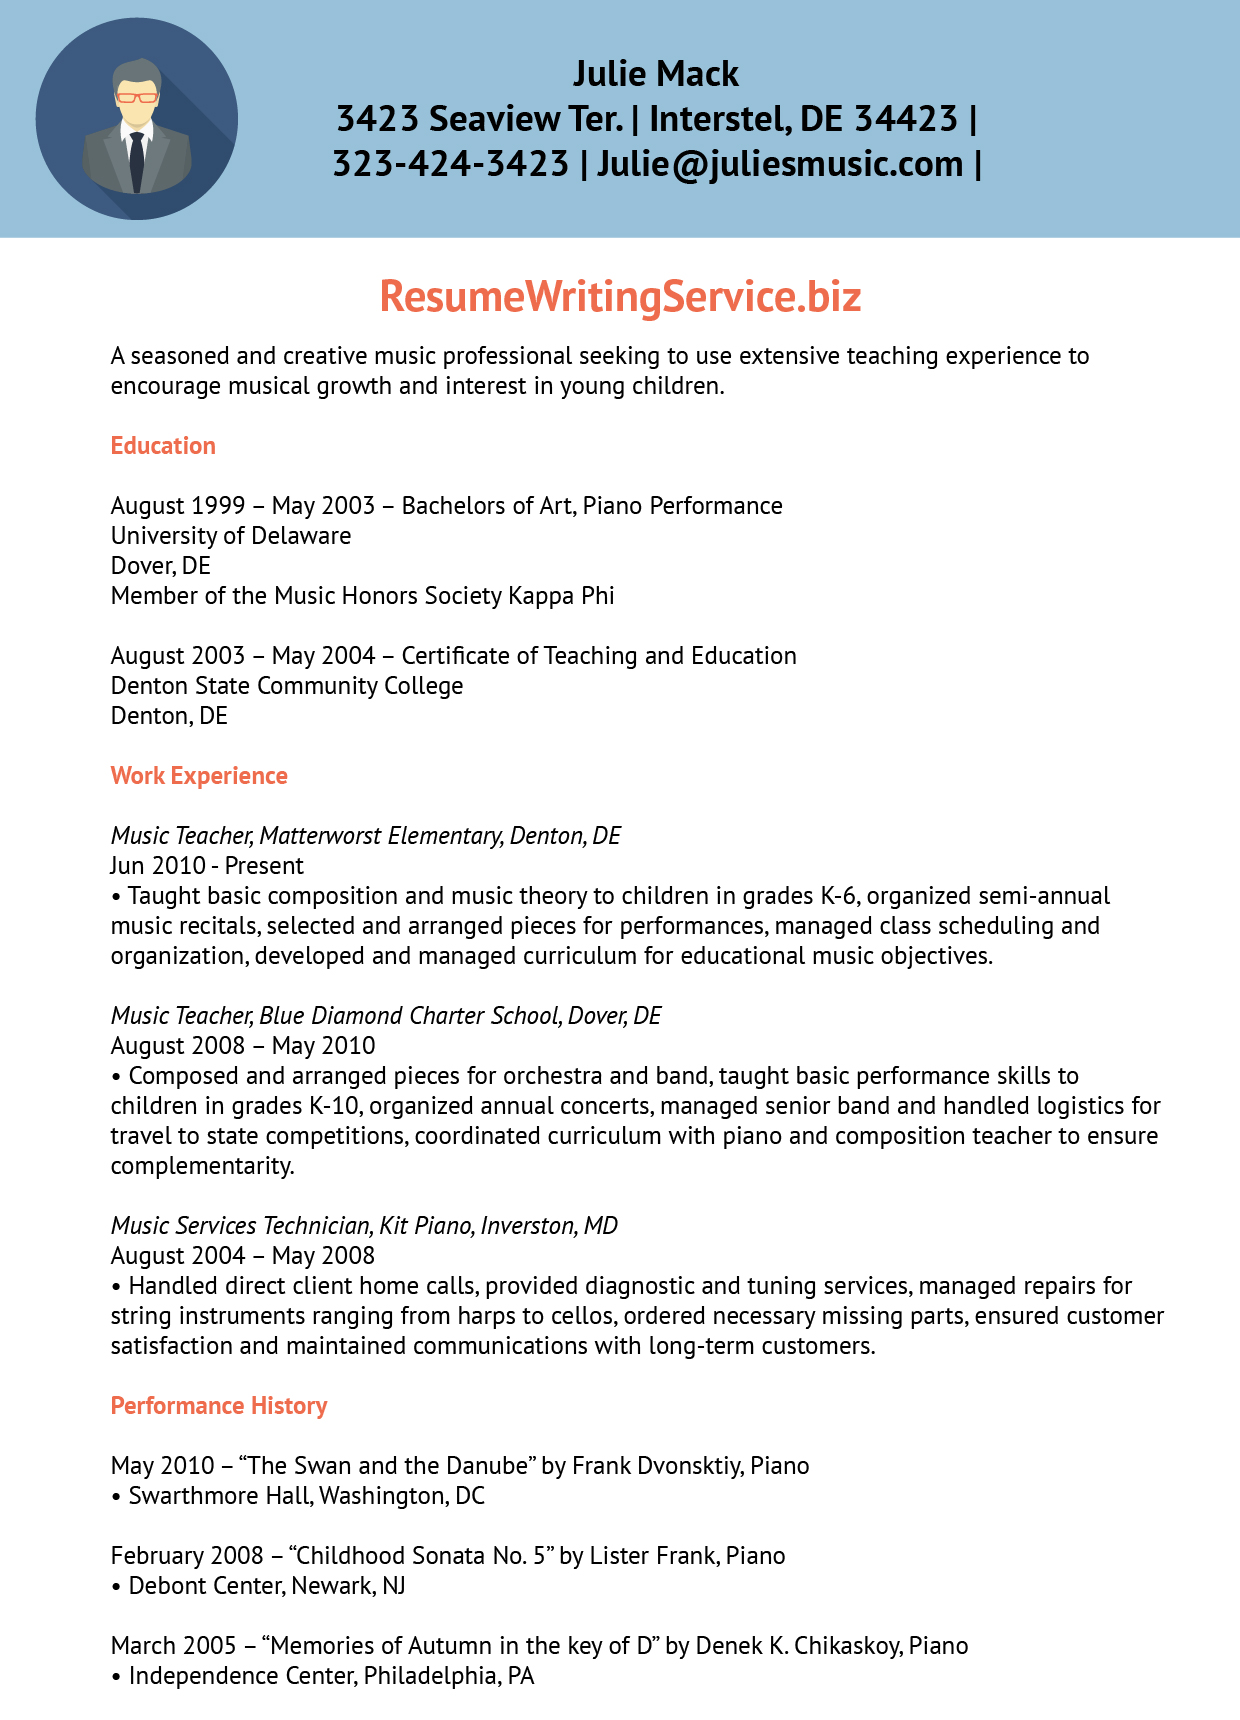 10 best resume writing services 4 teachers